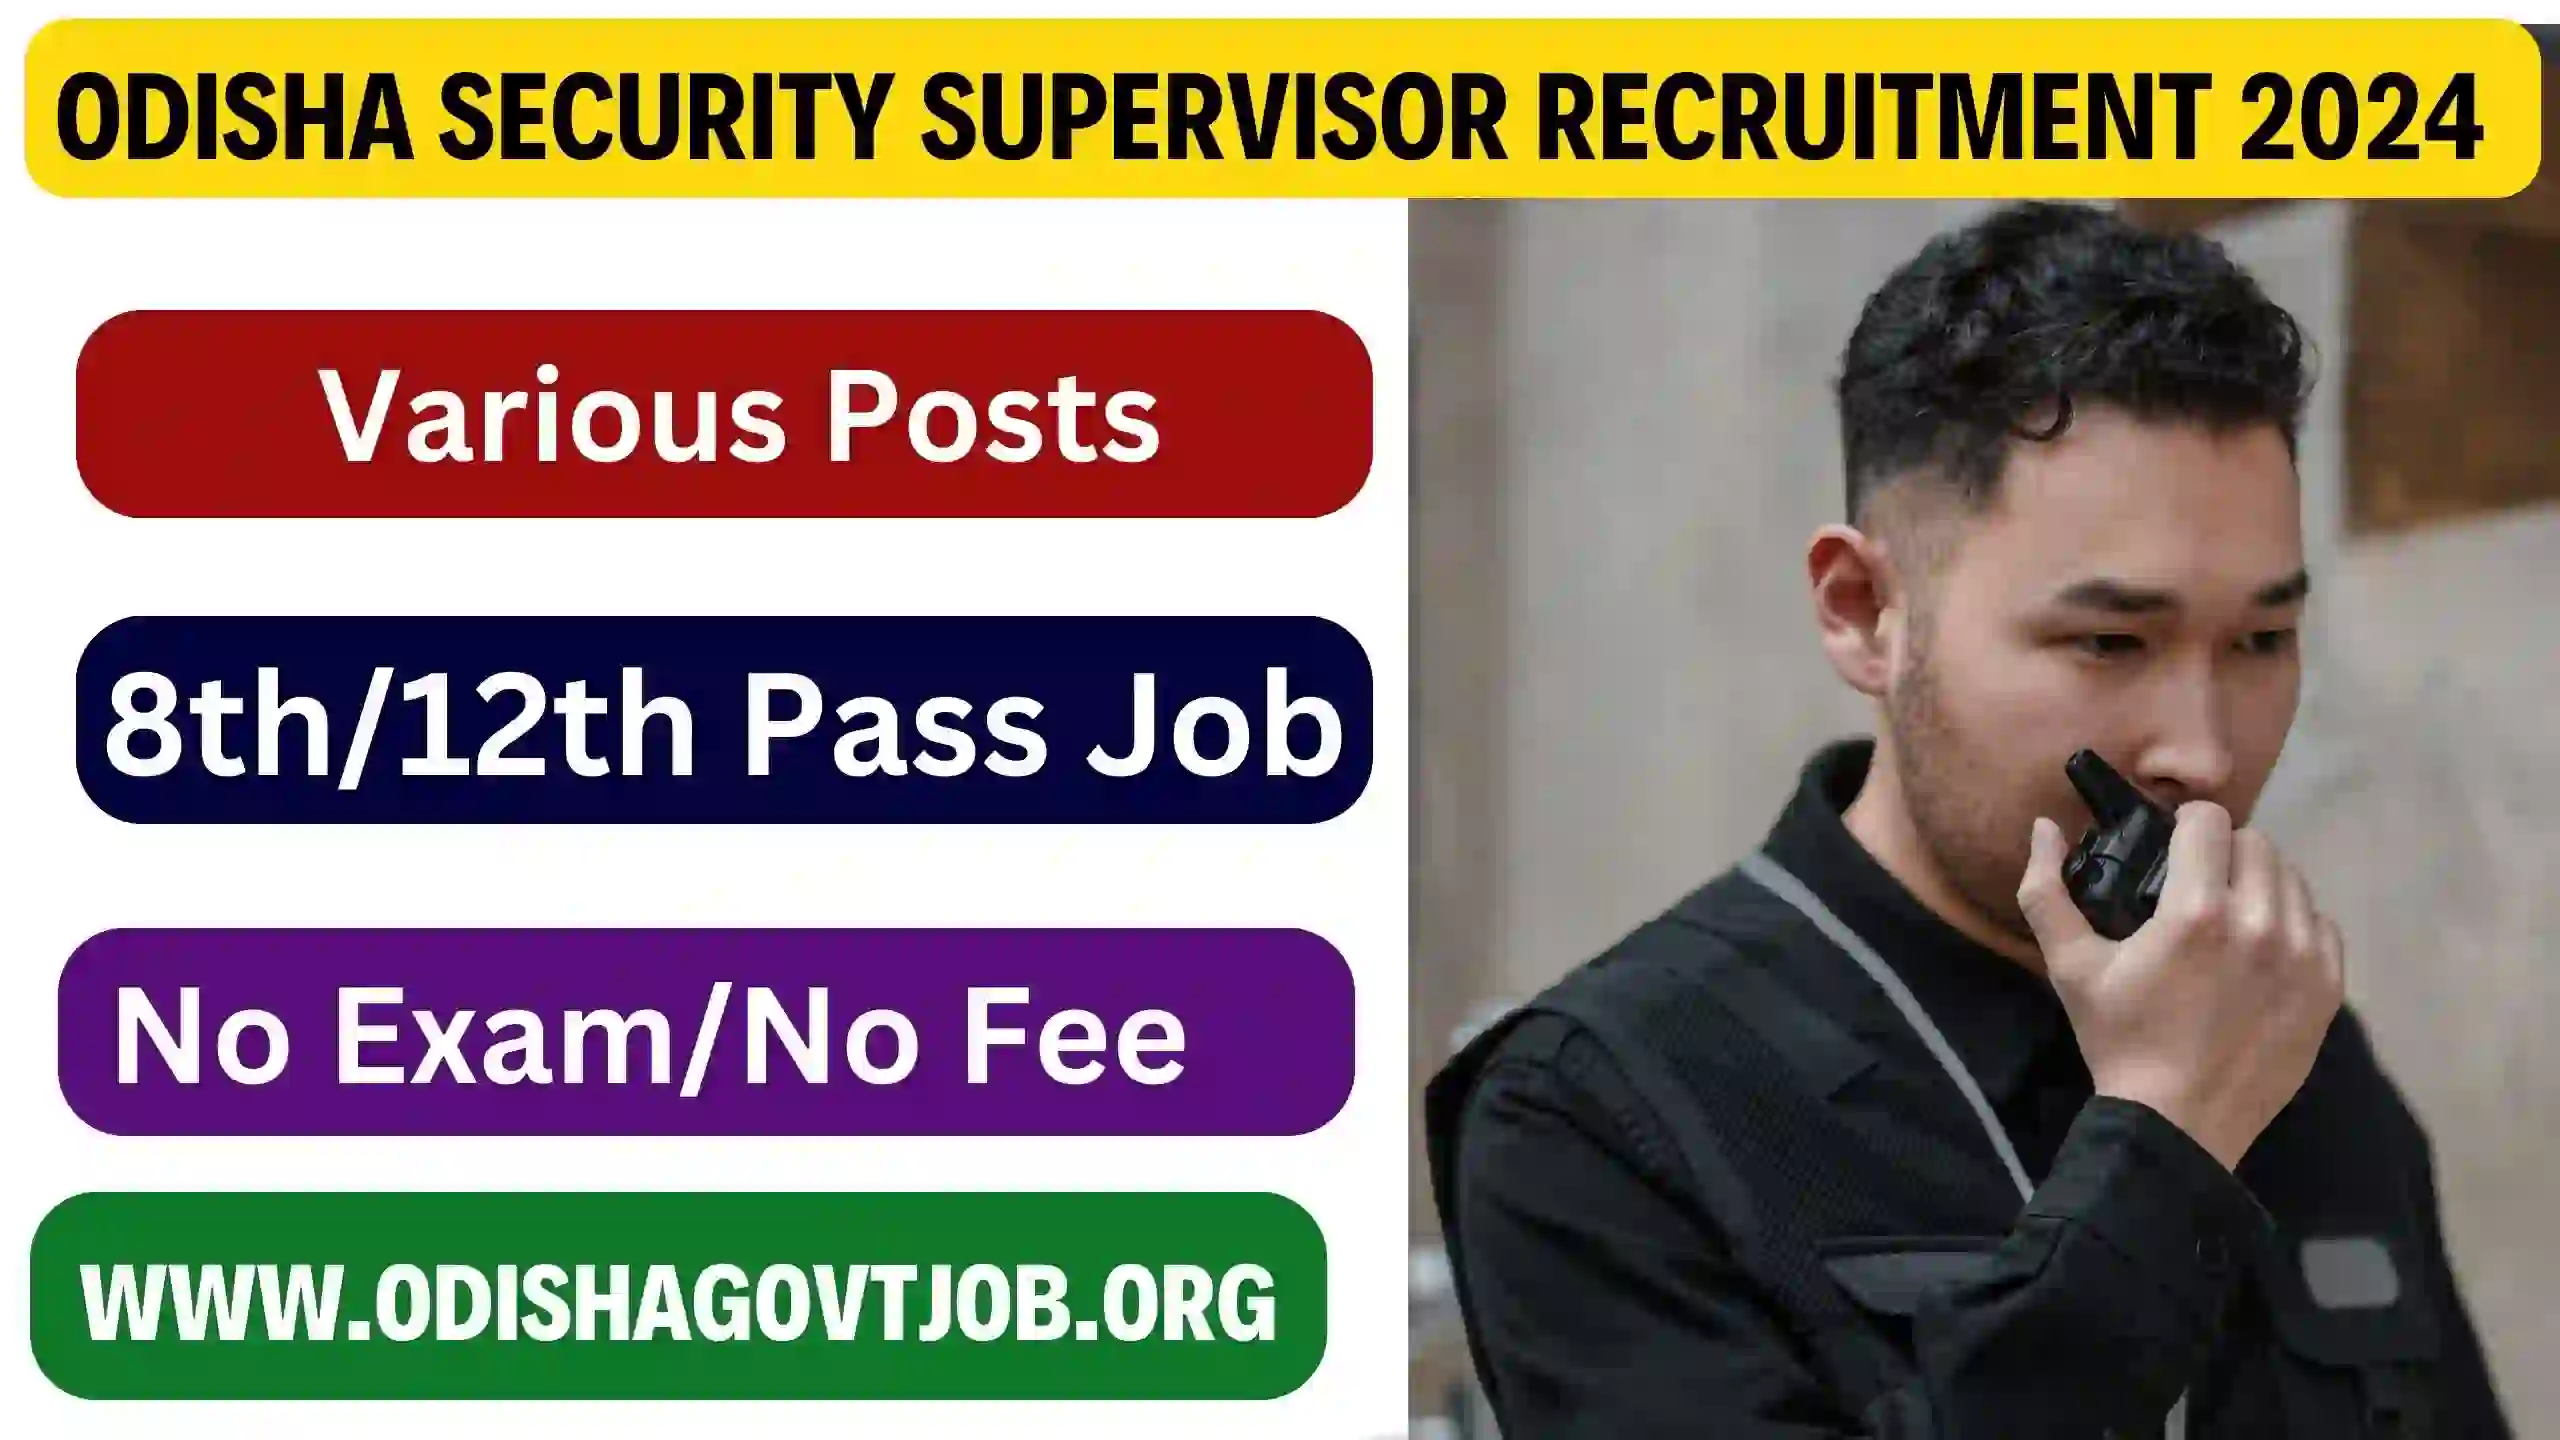 Odisha Security Supervisor Recruitment 2024